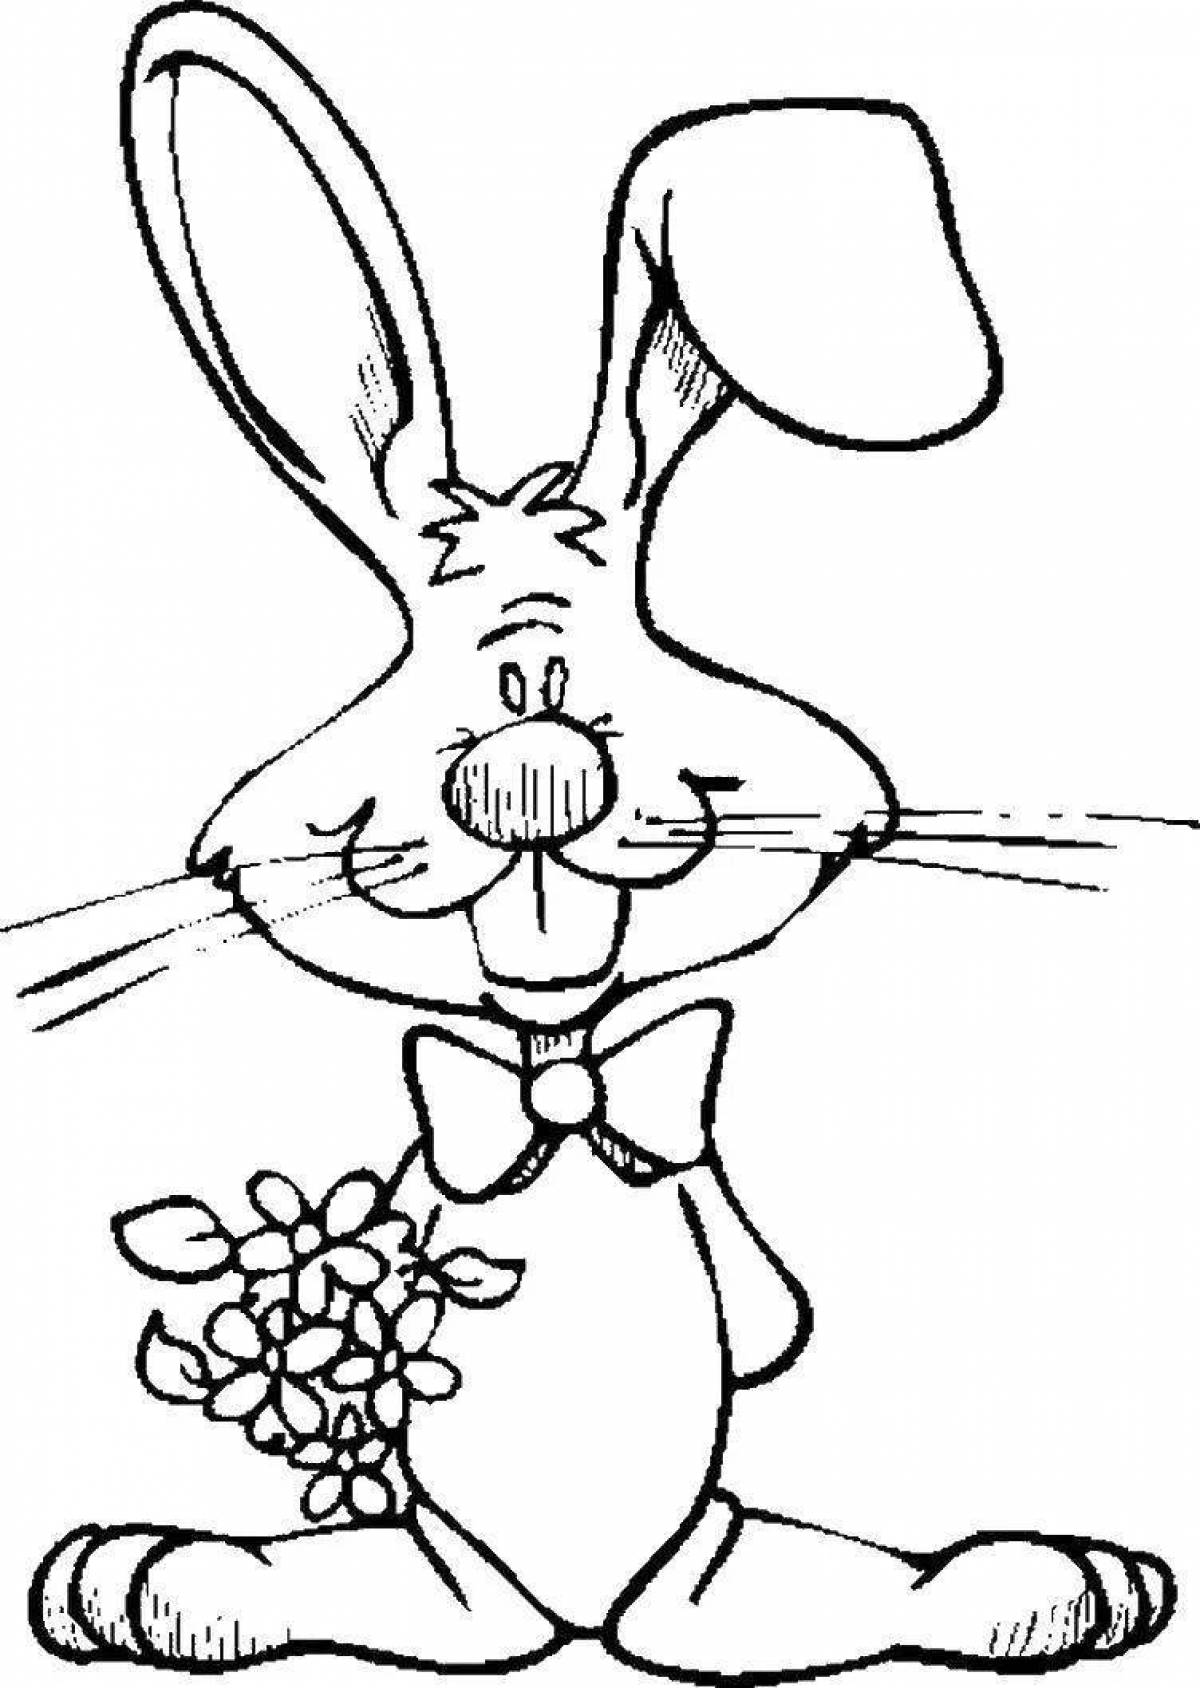 Smiling rabbit cartoon coloring book